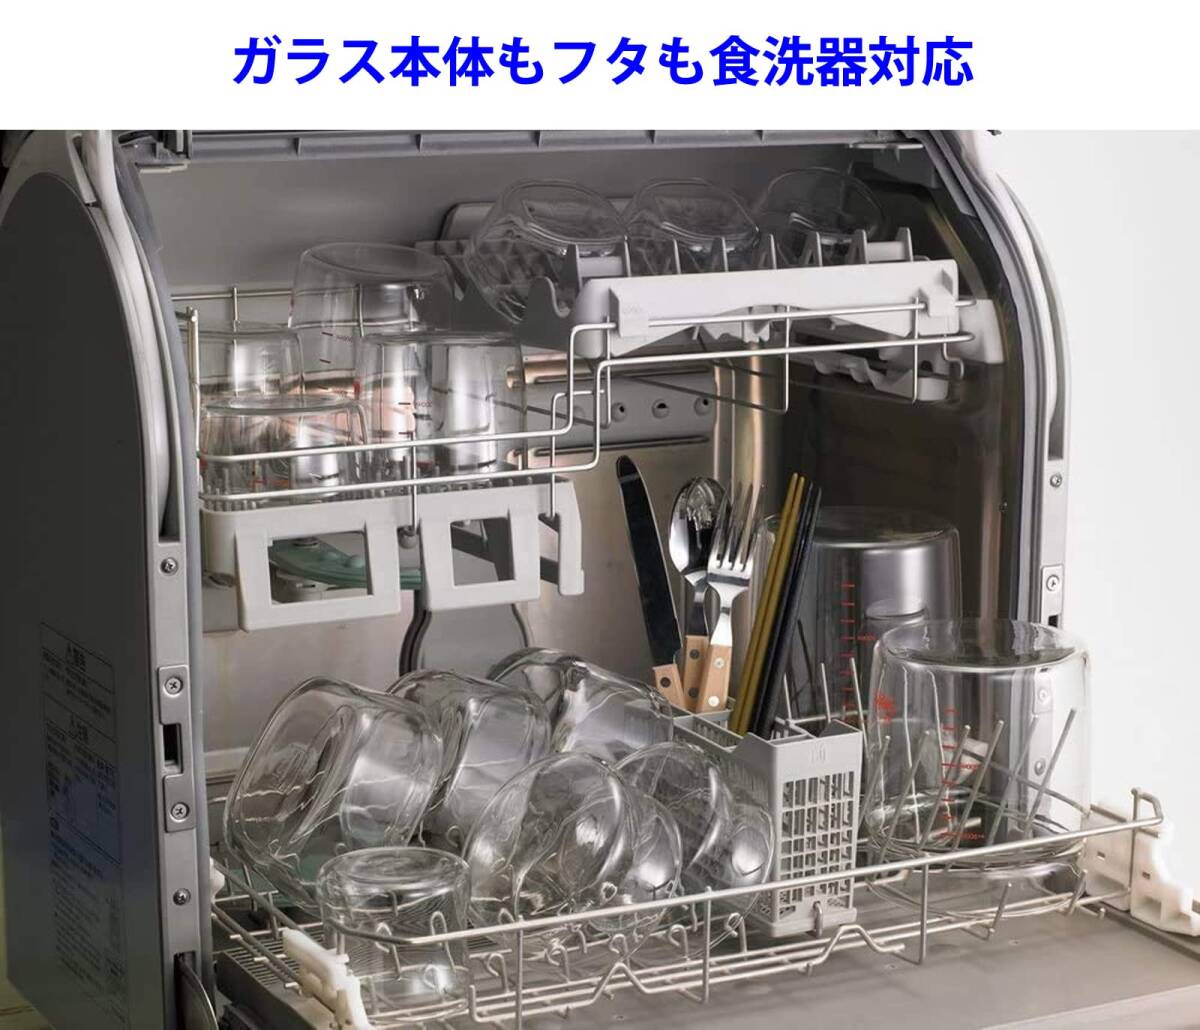 iwaki(イワキ) 耐熱ガラス 保存容器 アクアブルー 丸型 S 490ml パック&レンジ KBT7401HBL_画像5